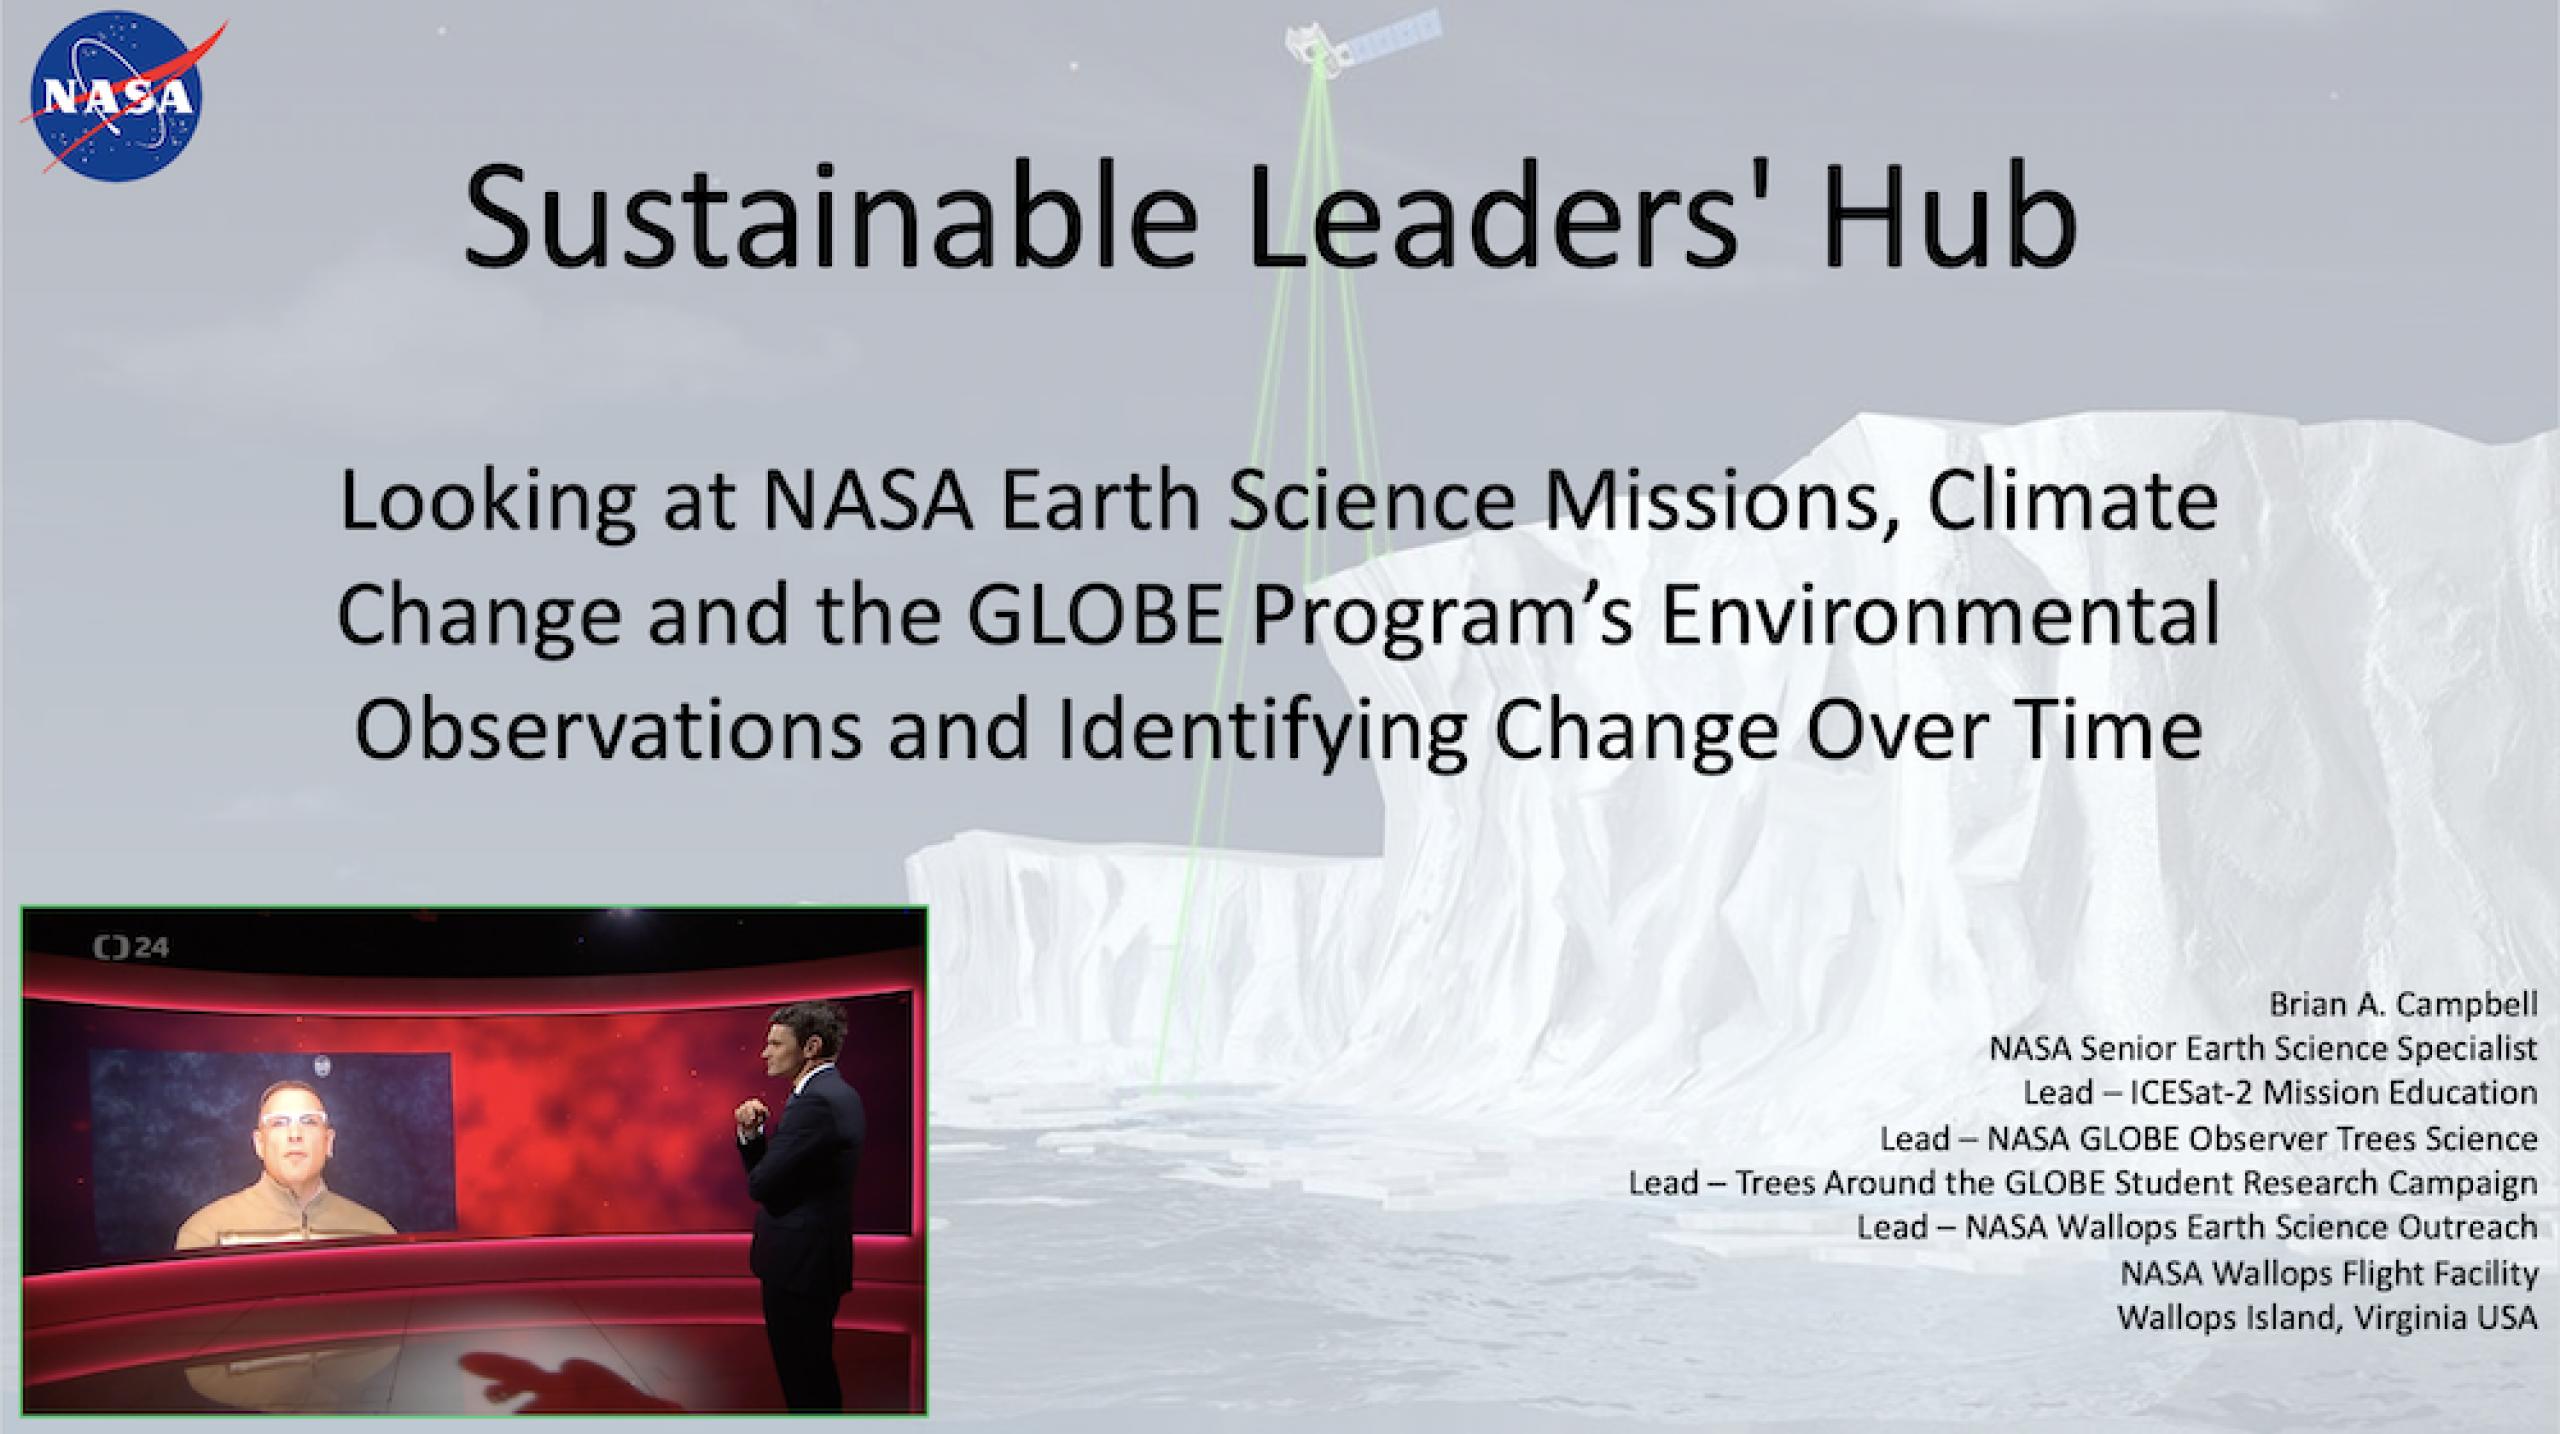 UN Environment Climate Leadership’s Sustainable Leaders’ Hub Program Workshop opening cover slide.